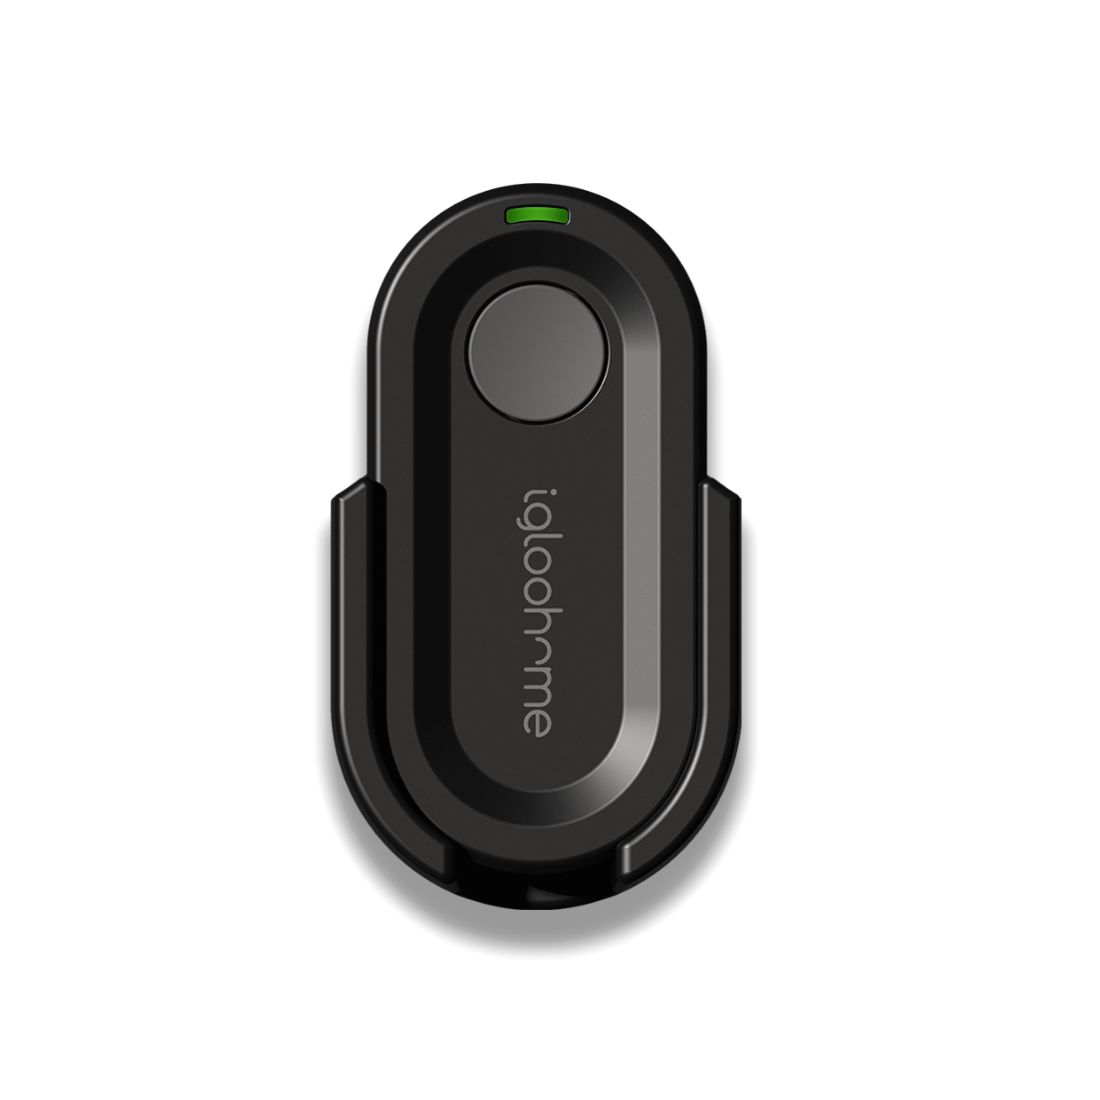 igloohome Key Fob Digital Smart Lock Remote